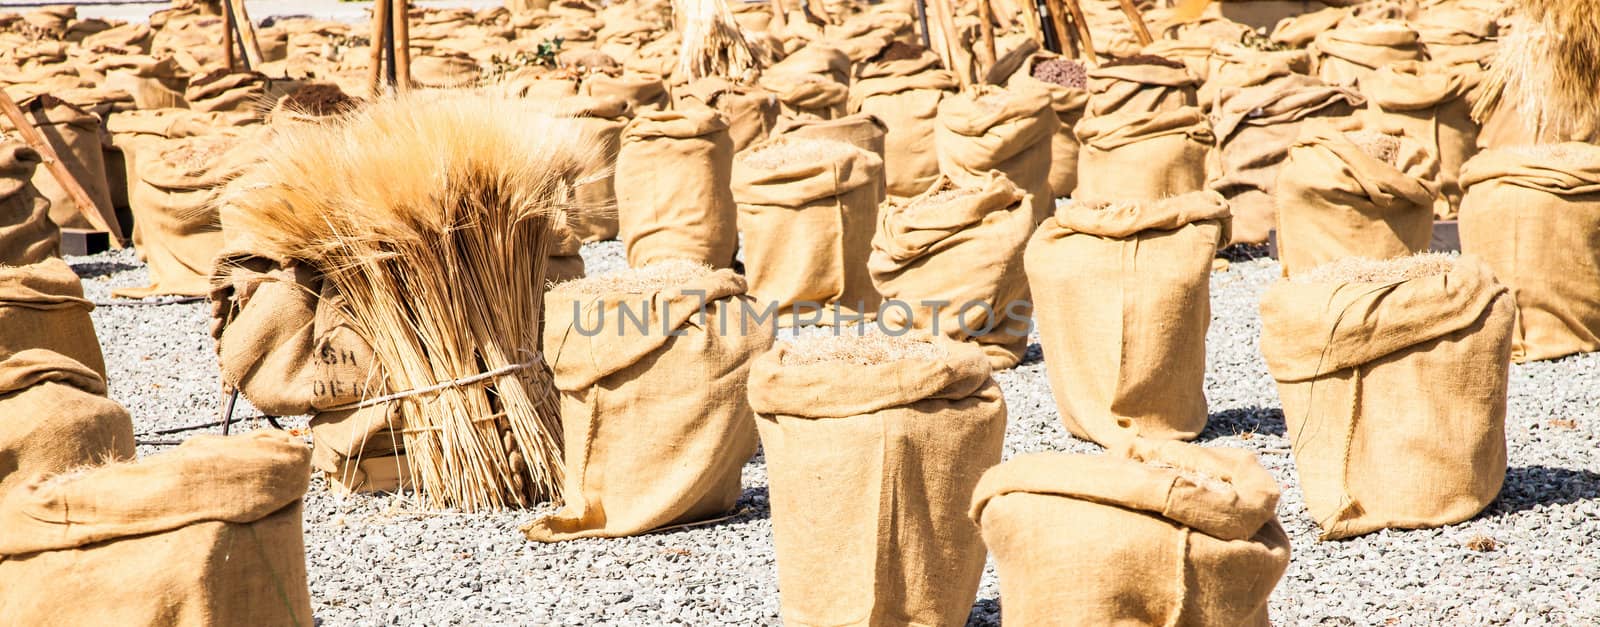 Wheat sacks during a sunny day in a warm  summer season